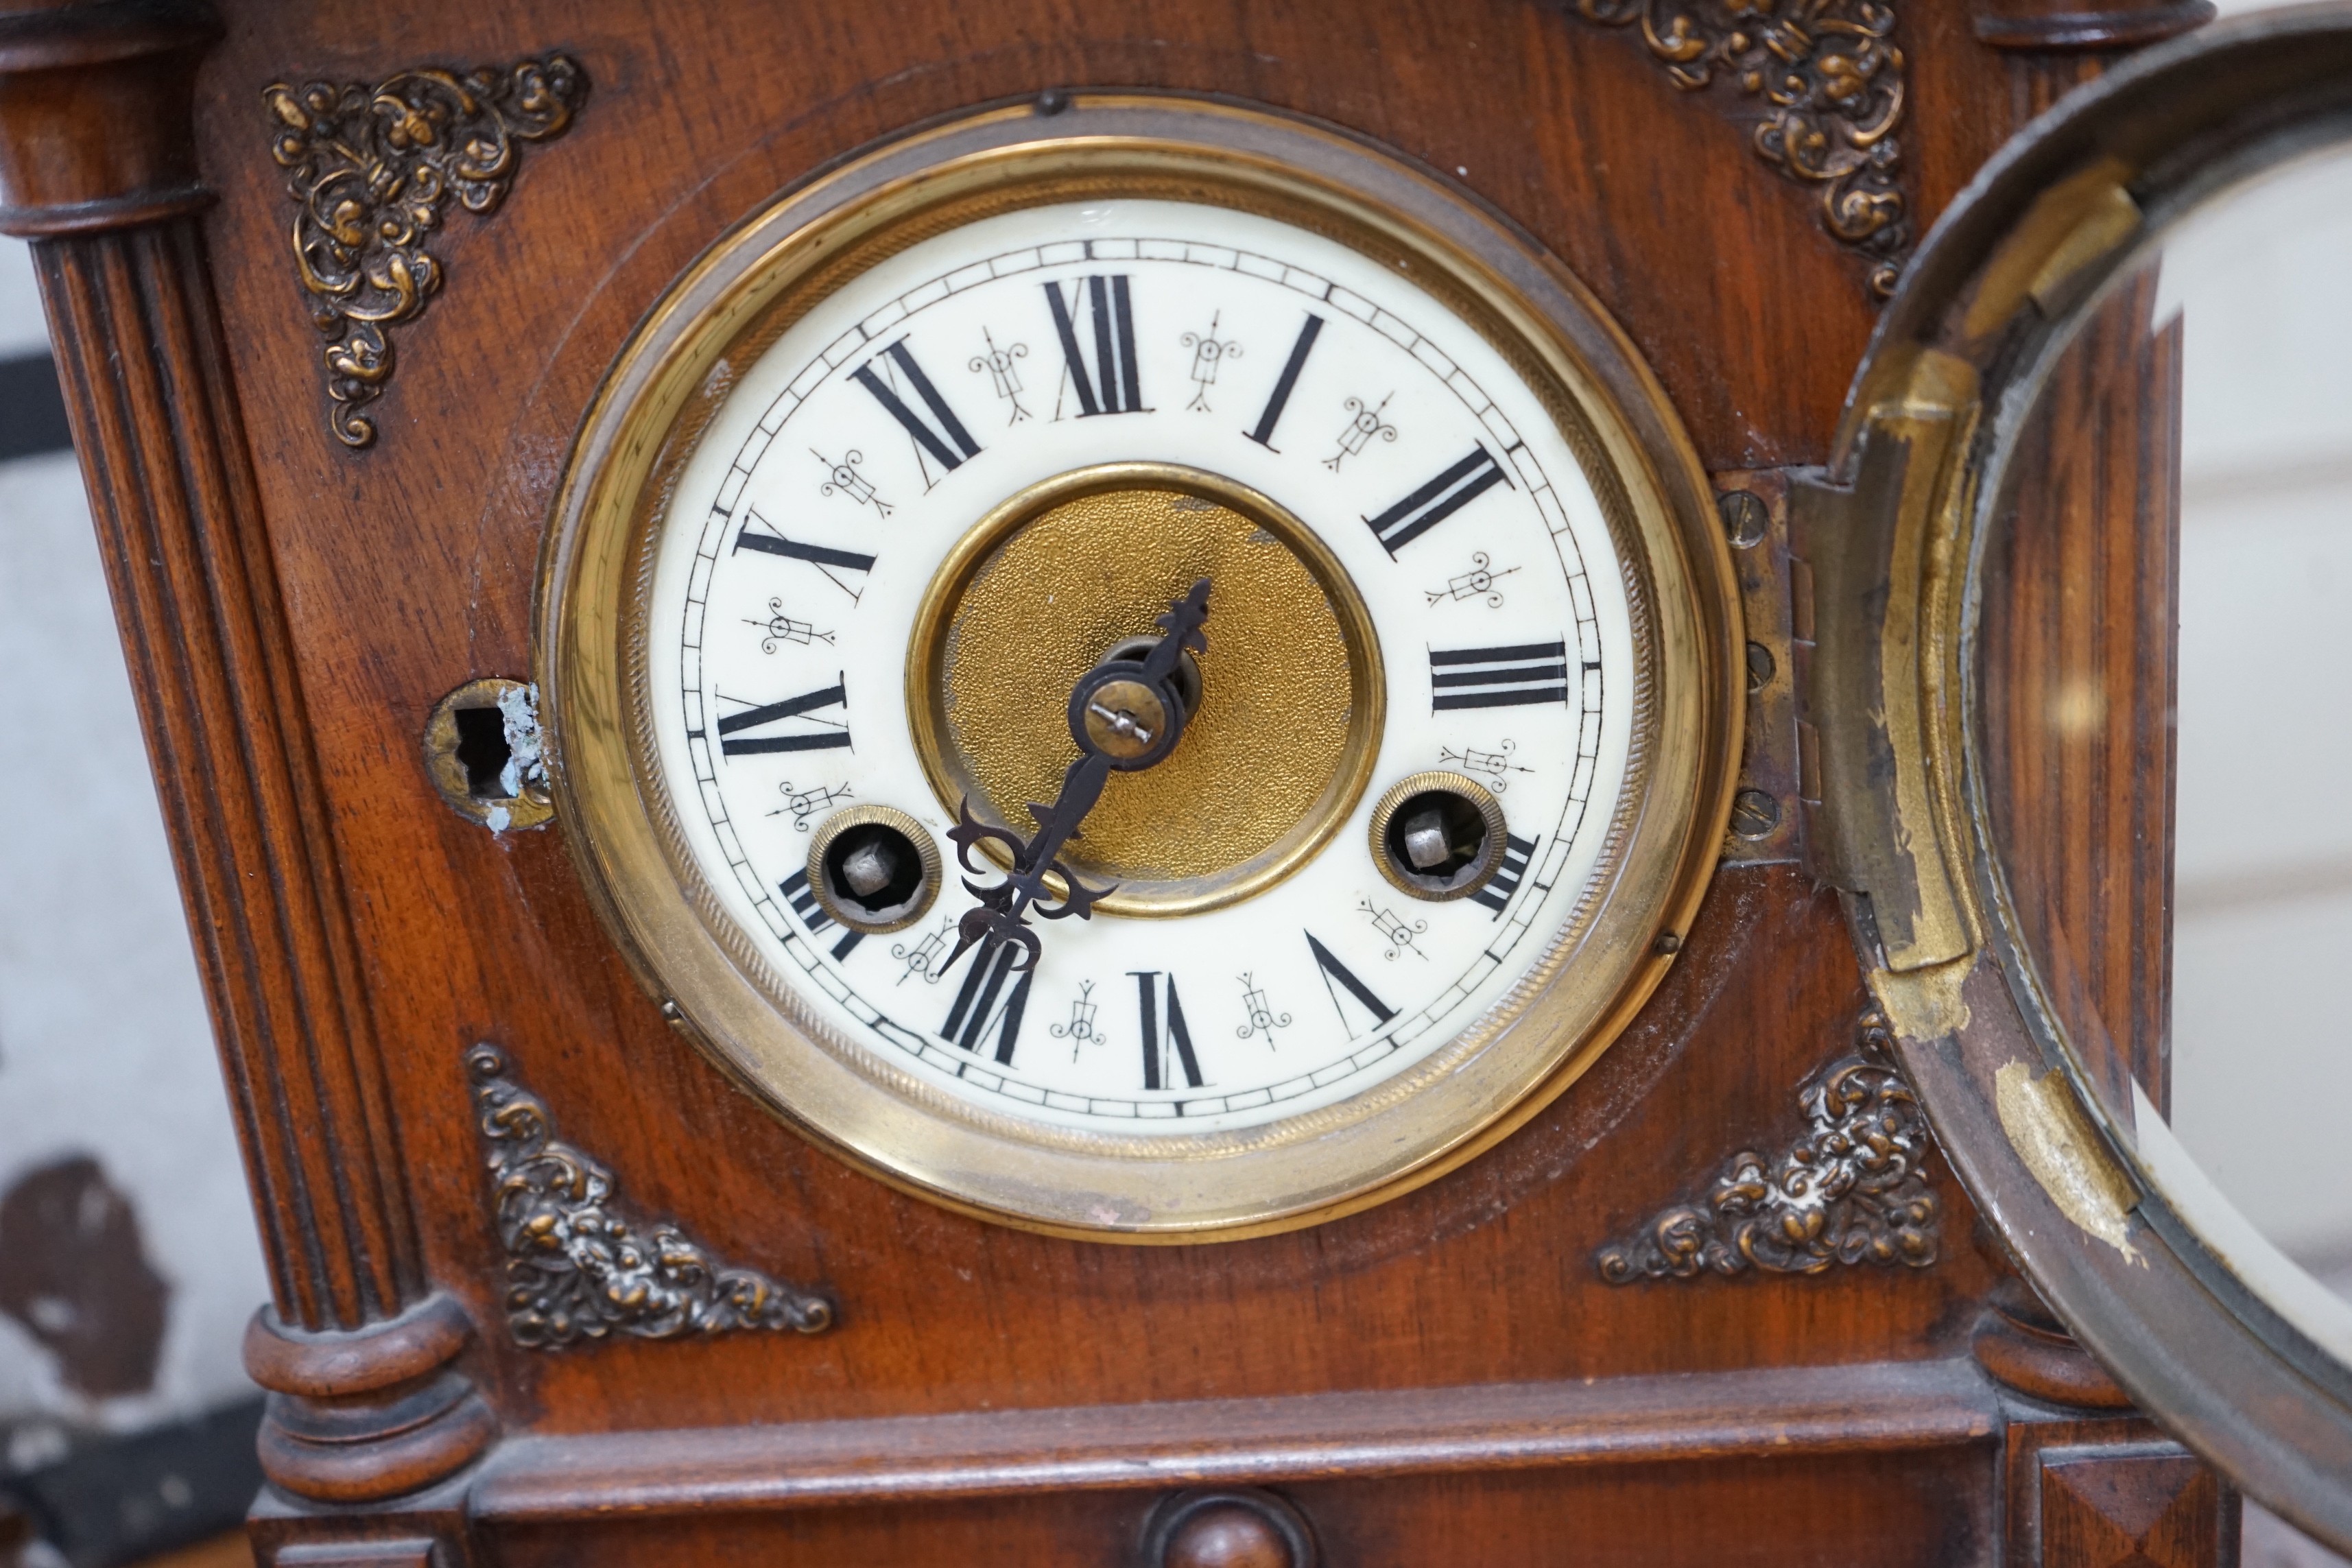 A 19th century German walnut mantel clock with key and pendulum, 40cm tall